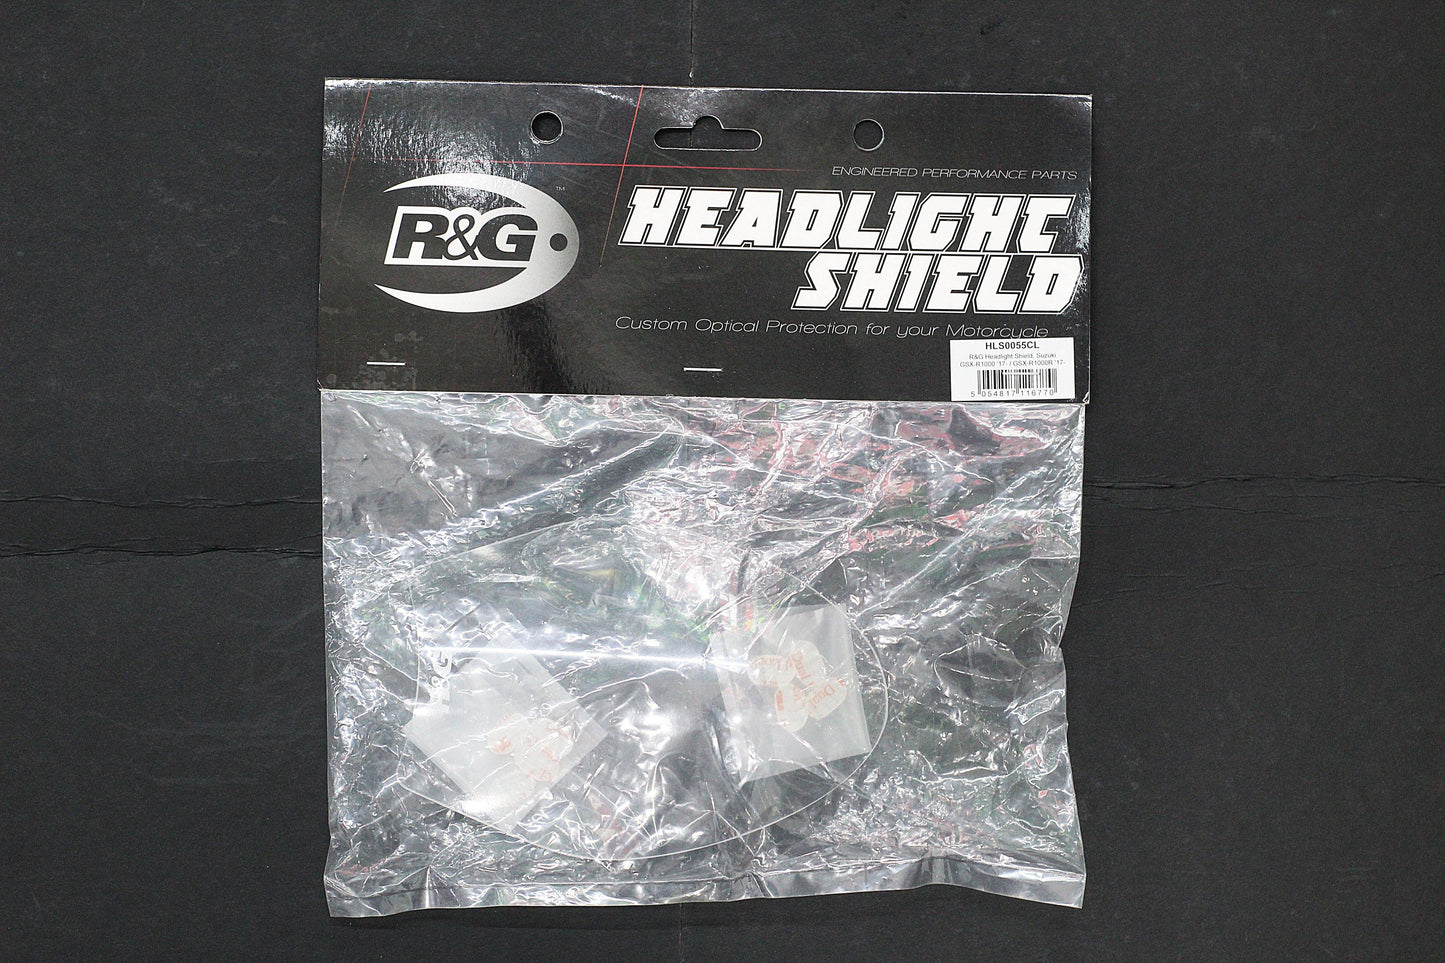 R&G Headlight Shield fits for Suzuki GSX-R1000 ('17-) / GSX-R1000R ('17-) - Durian Bikers